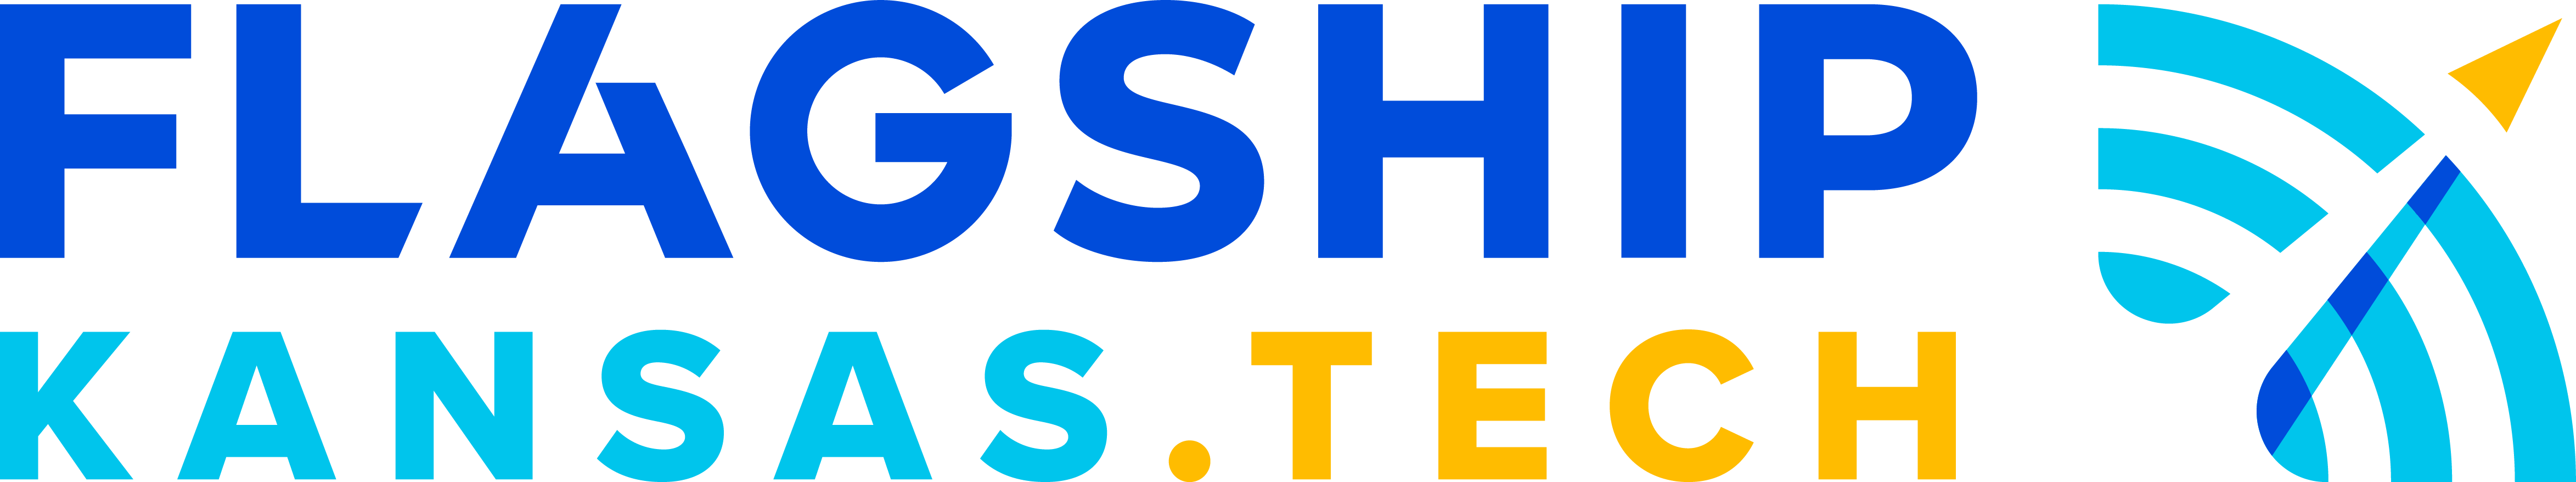 Flagship Kansas Tech logo